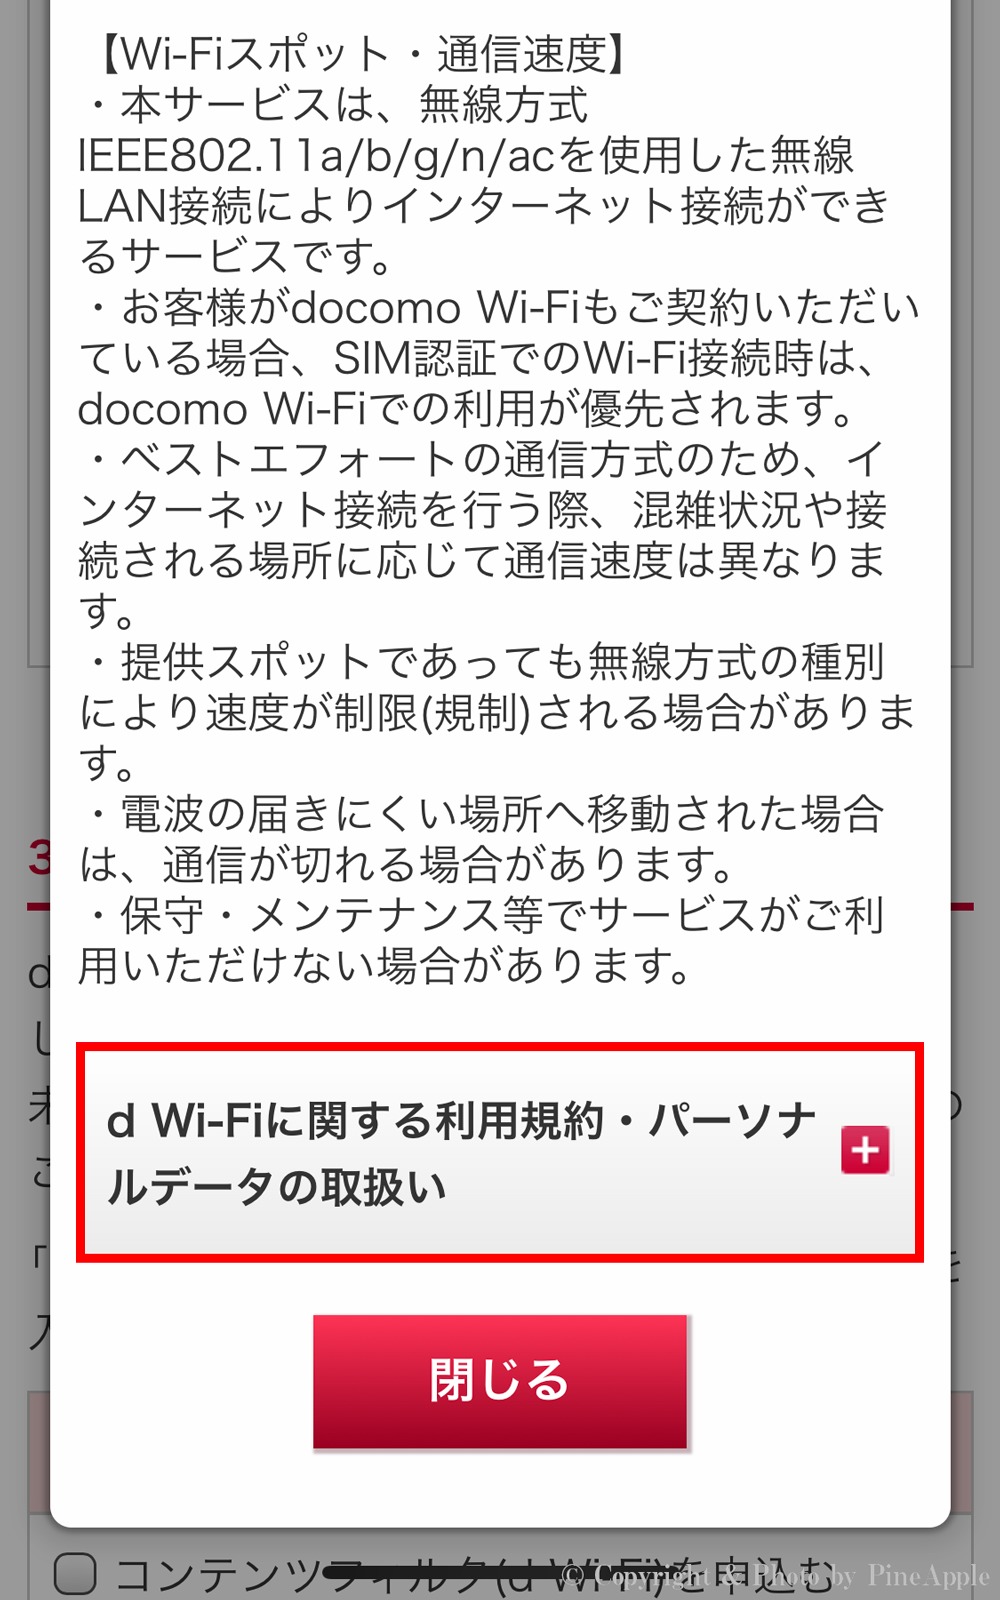 [d Wi-Fi に関する利用規約・パーソナルデータの取扱い] をタップ